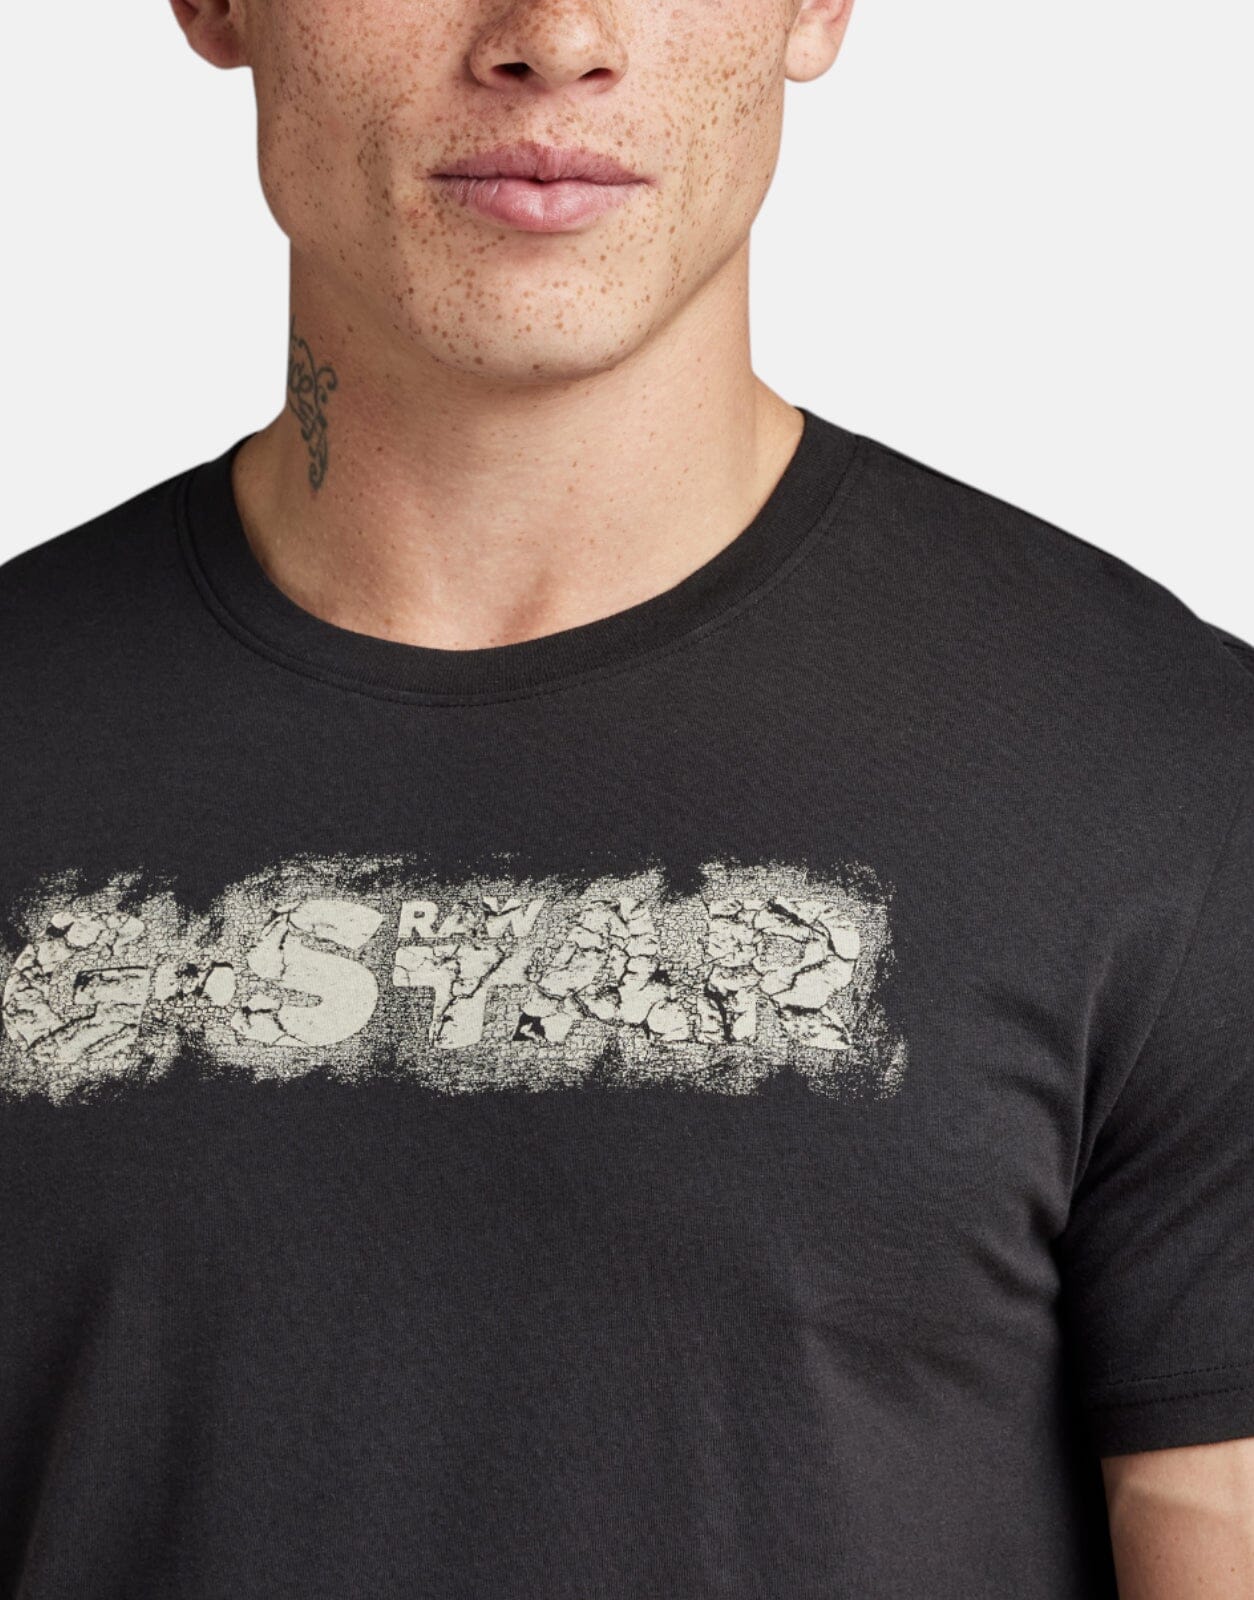 G-Star RAW Distressed Logo Black T-Shirt - Subwear